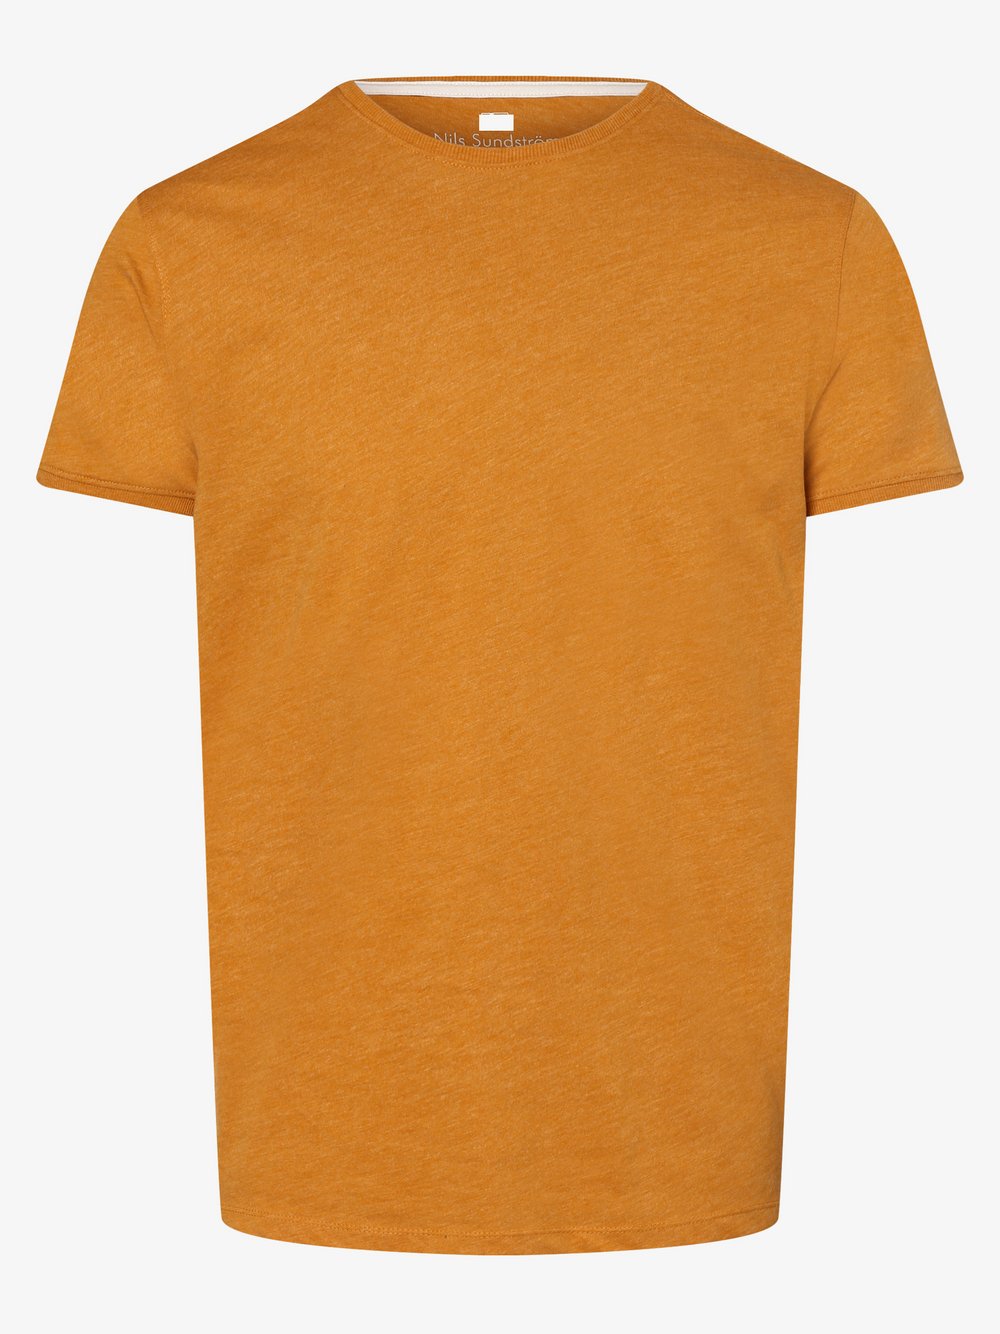 Nils Sundström - T-shirt męski, żółty